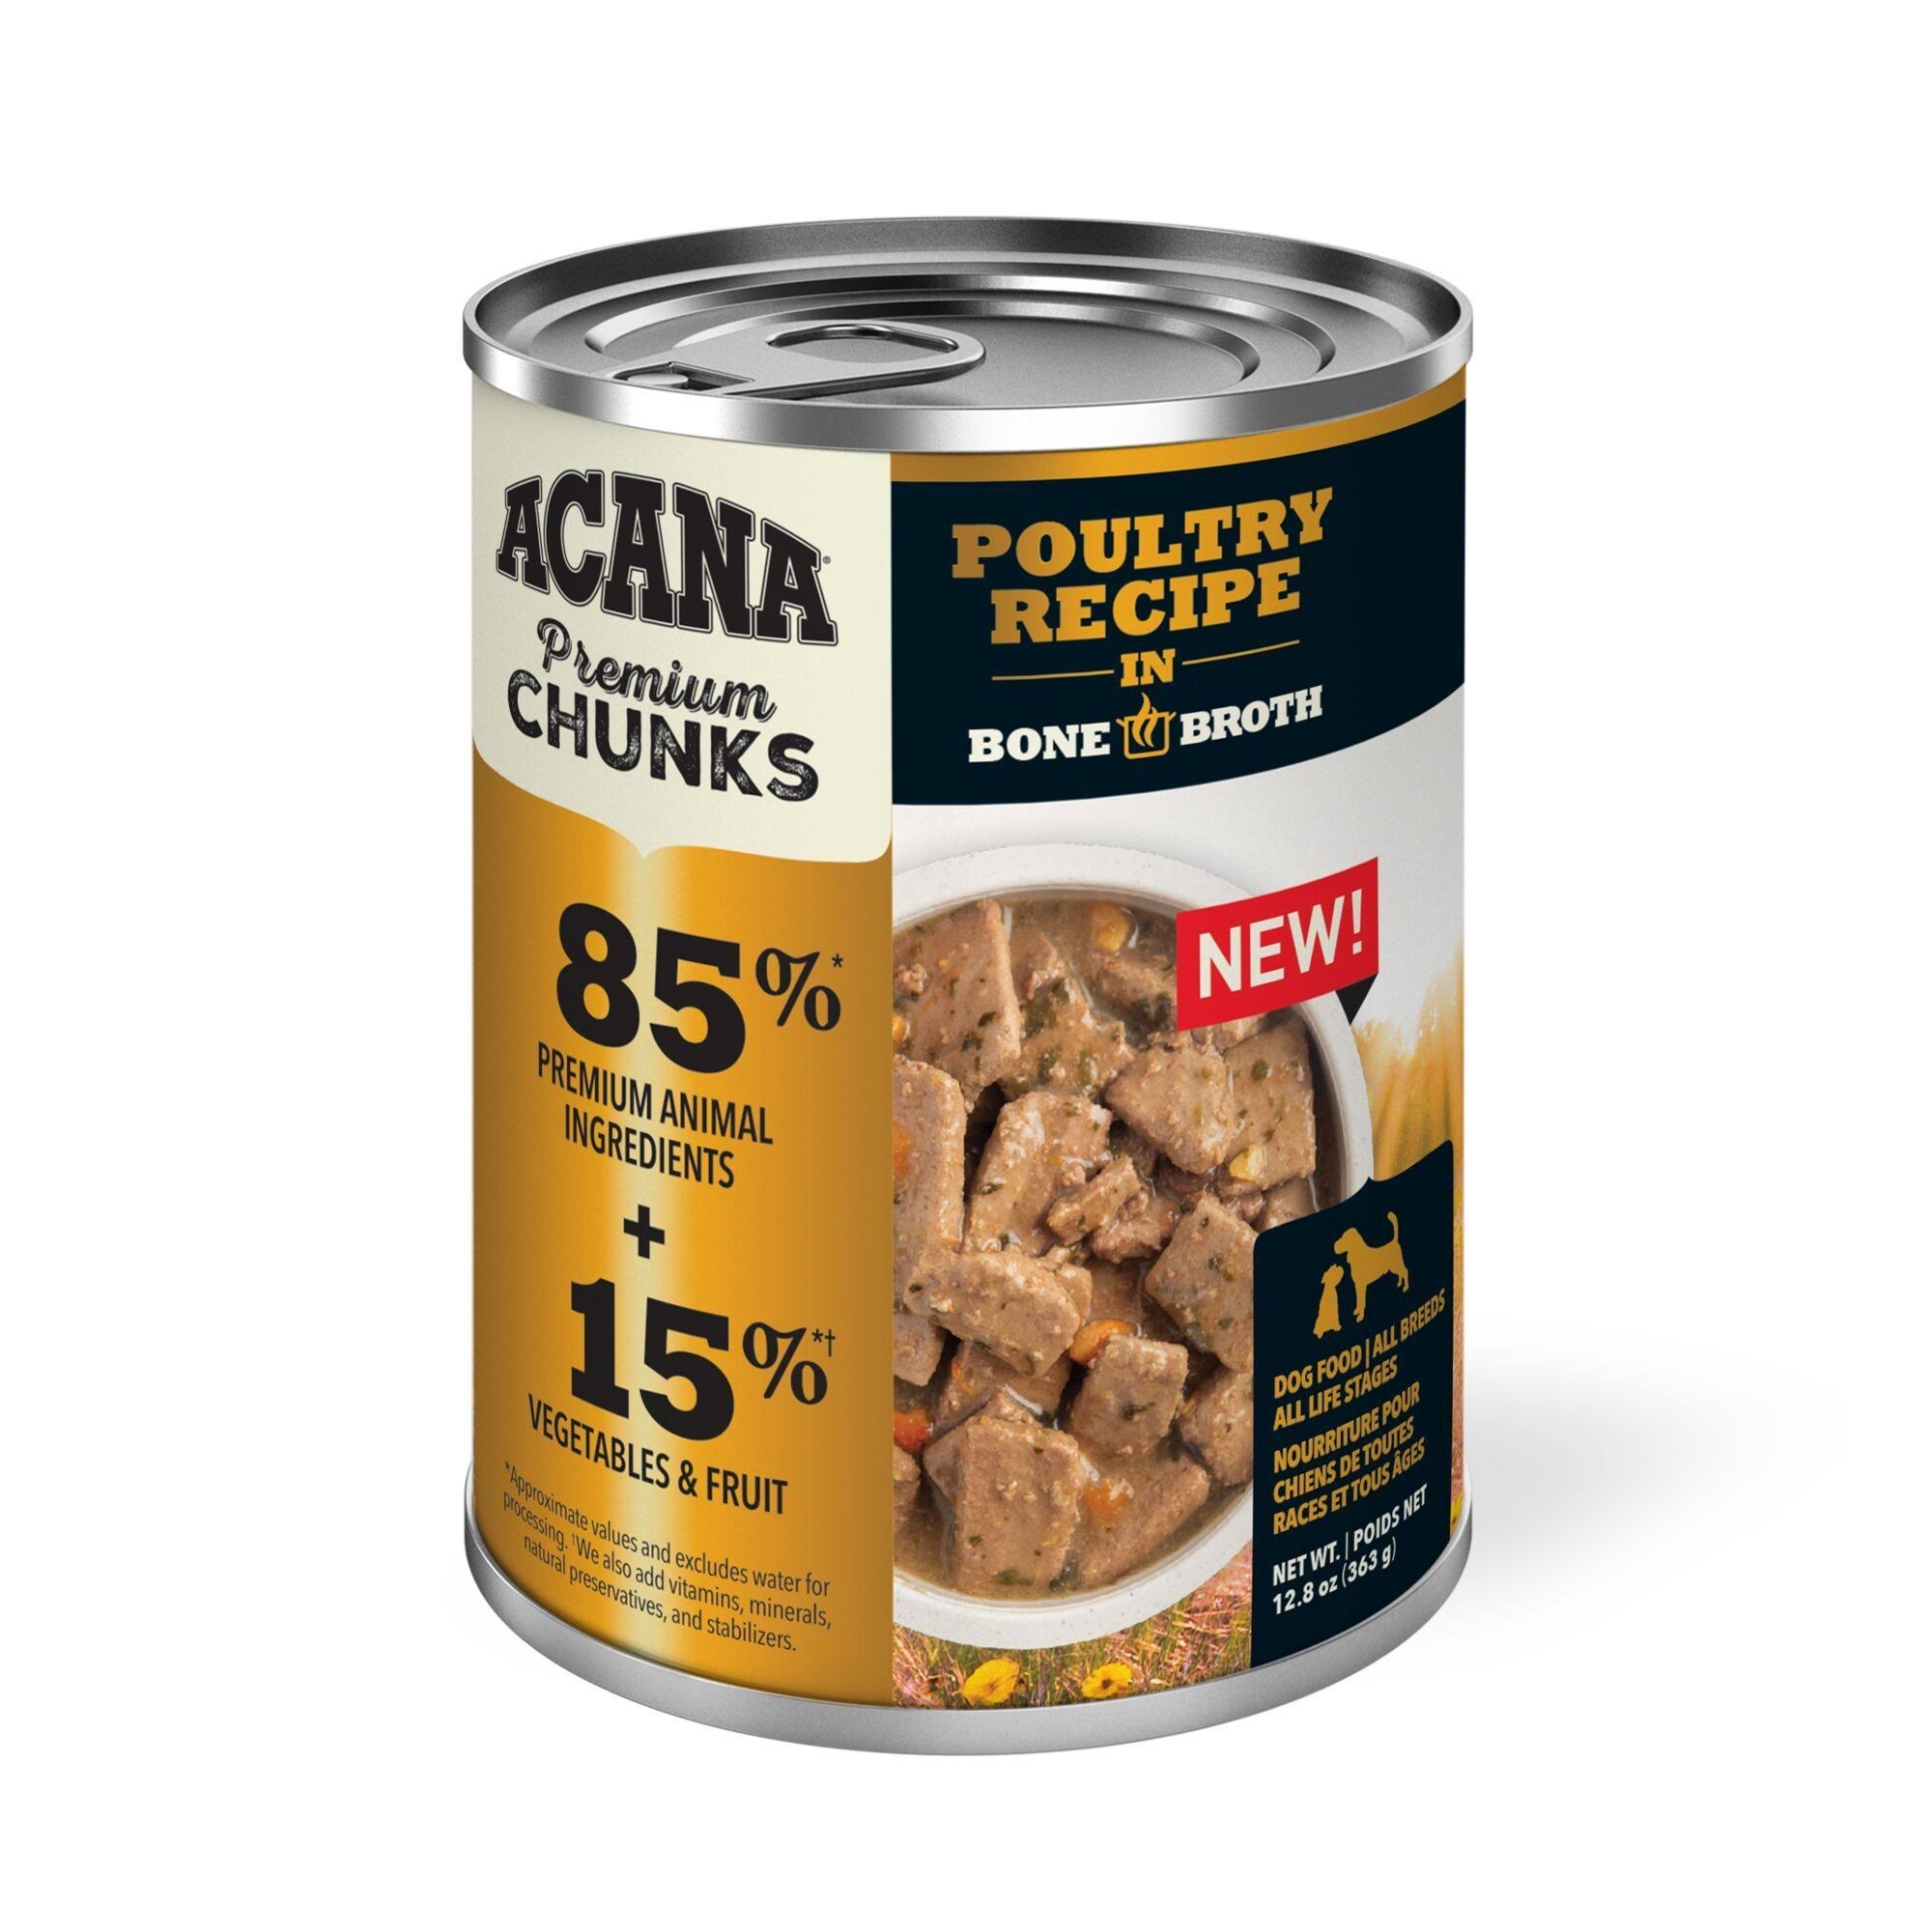 ACANA Premium Chunks Poultry Recipe in Bone Broth Dog Food, 12.8-oz